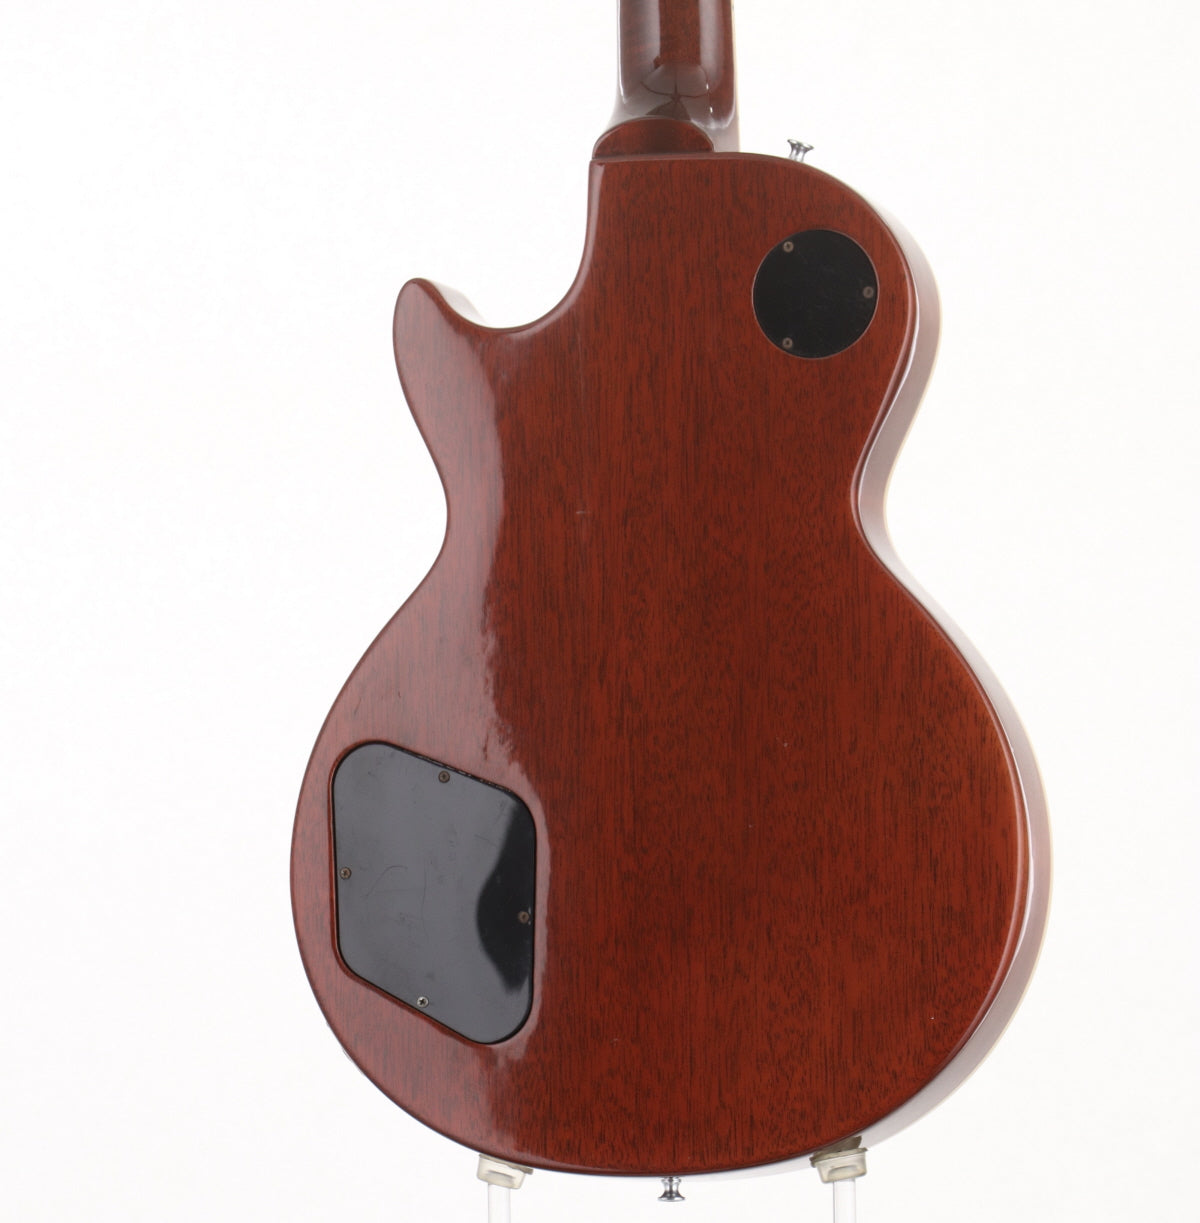 [SN 02263390] USED Gibson USA / 50s Les Paul Standard Plus Honey Burst 2003 [10]